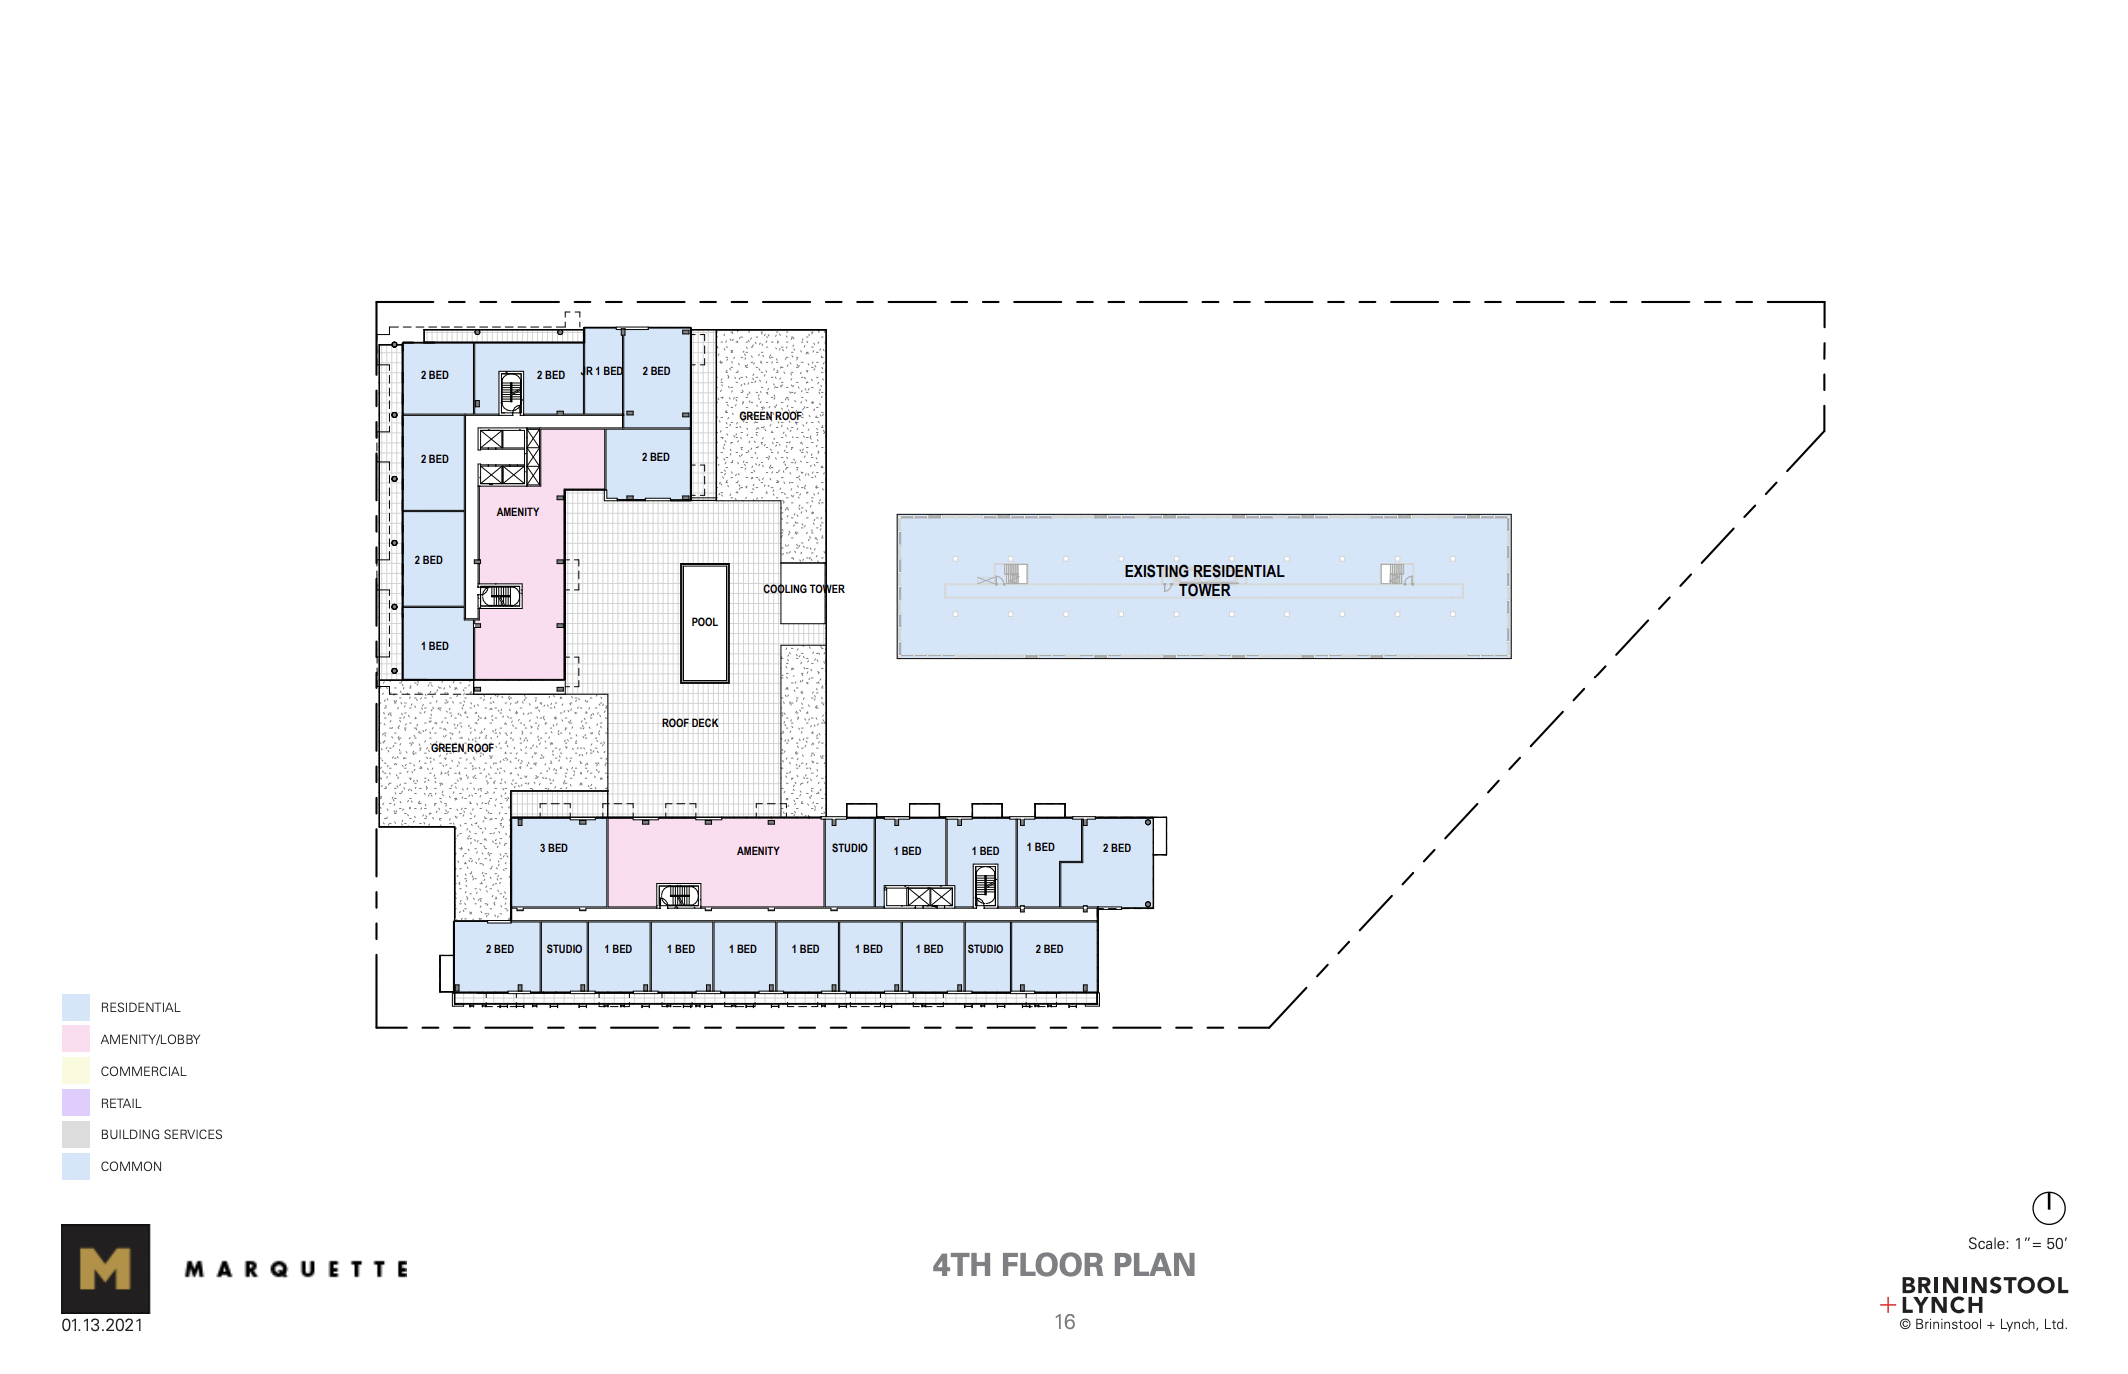 Fourth floor in master plan (513 S Damen Avenue in upper left)